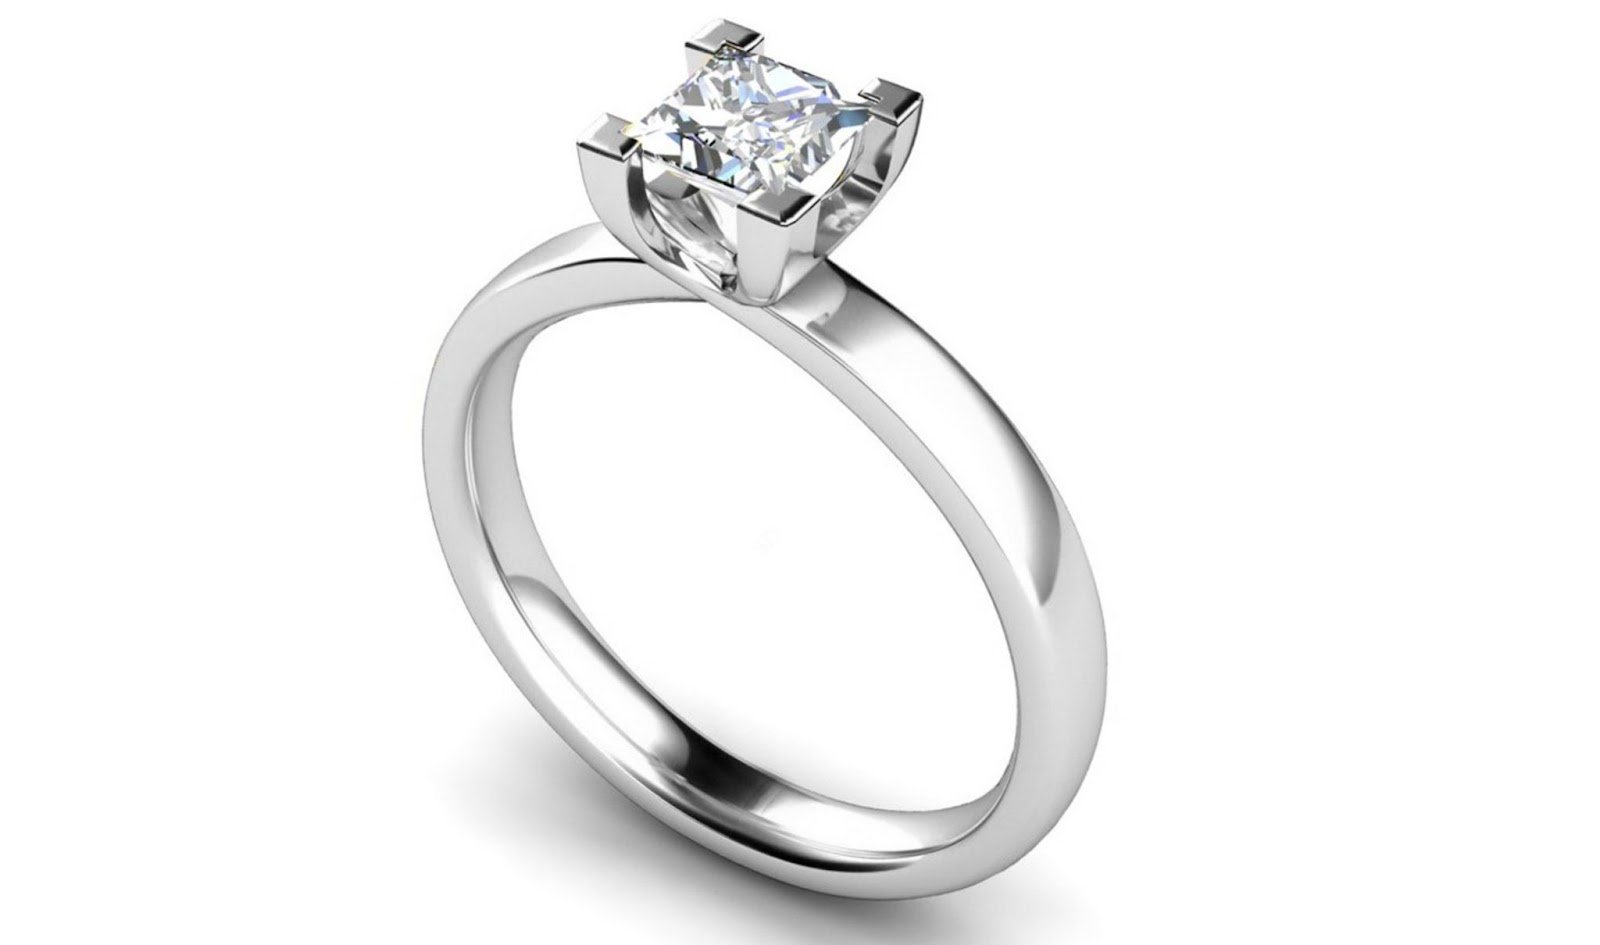 https://www.shiningdiamonds.co.uk/hrp387-princess-solitaire-diamond-ring